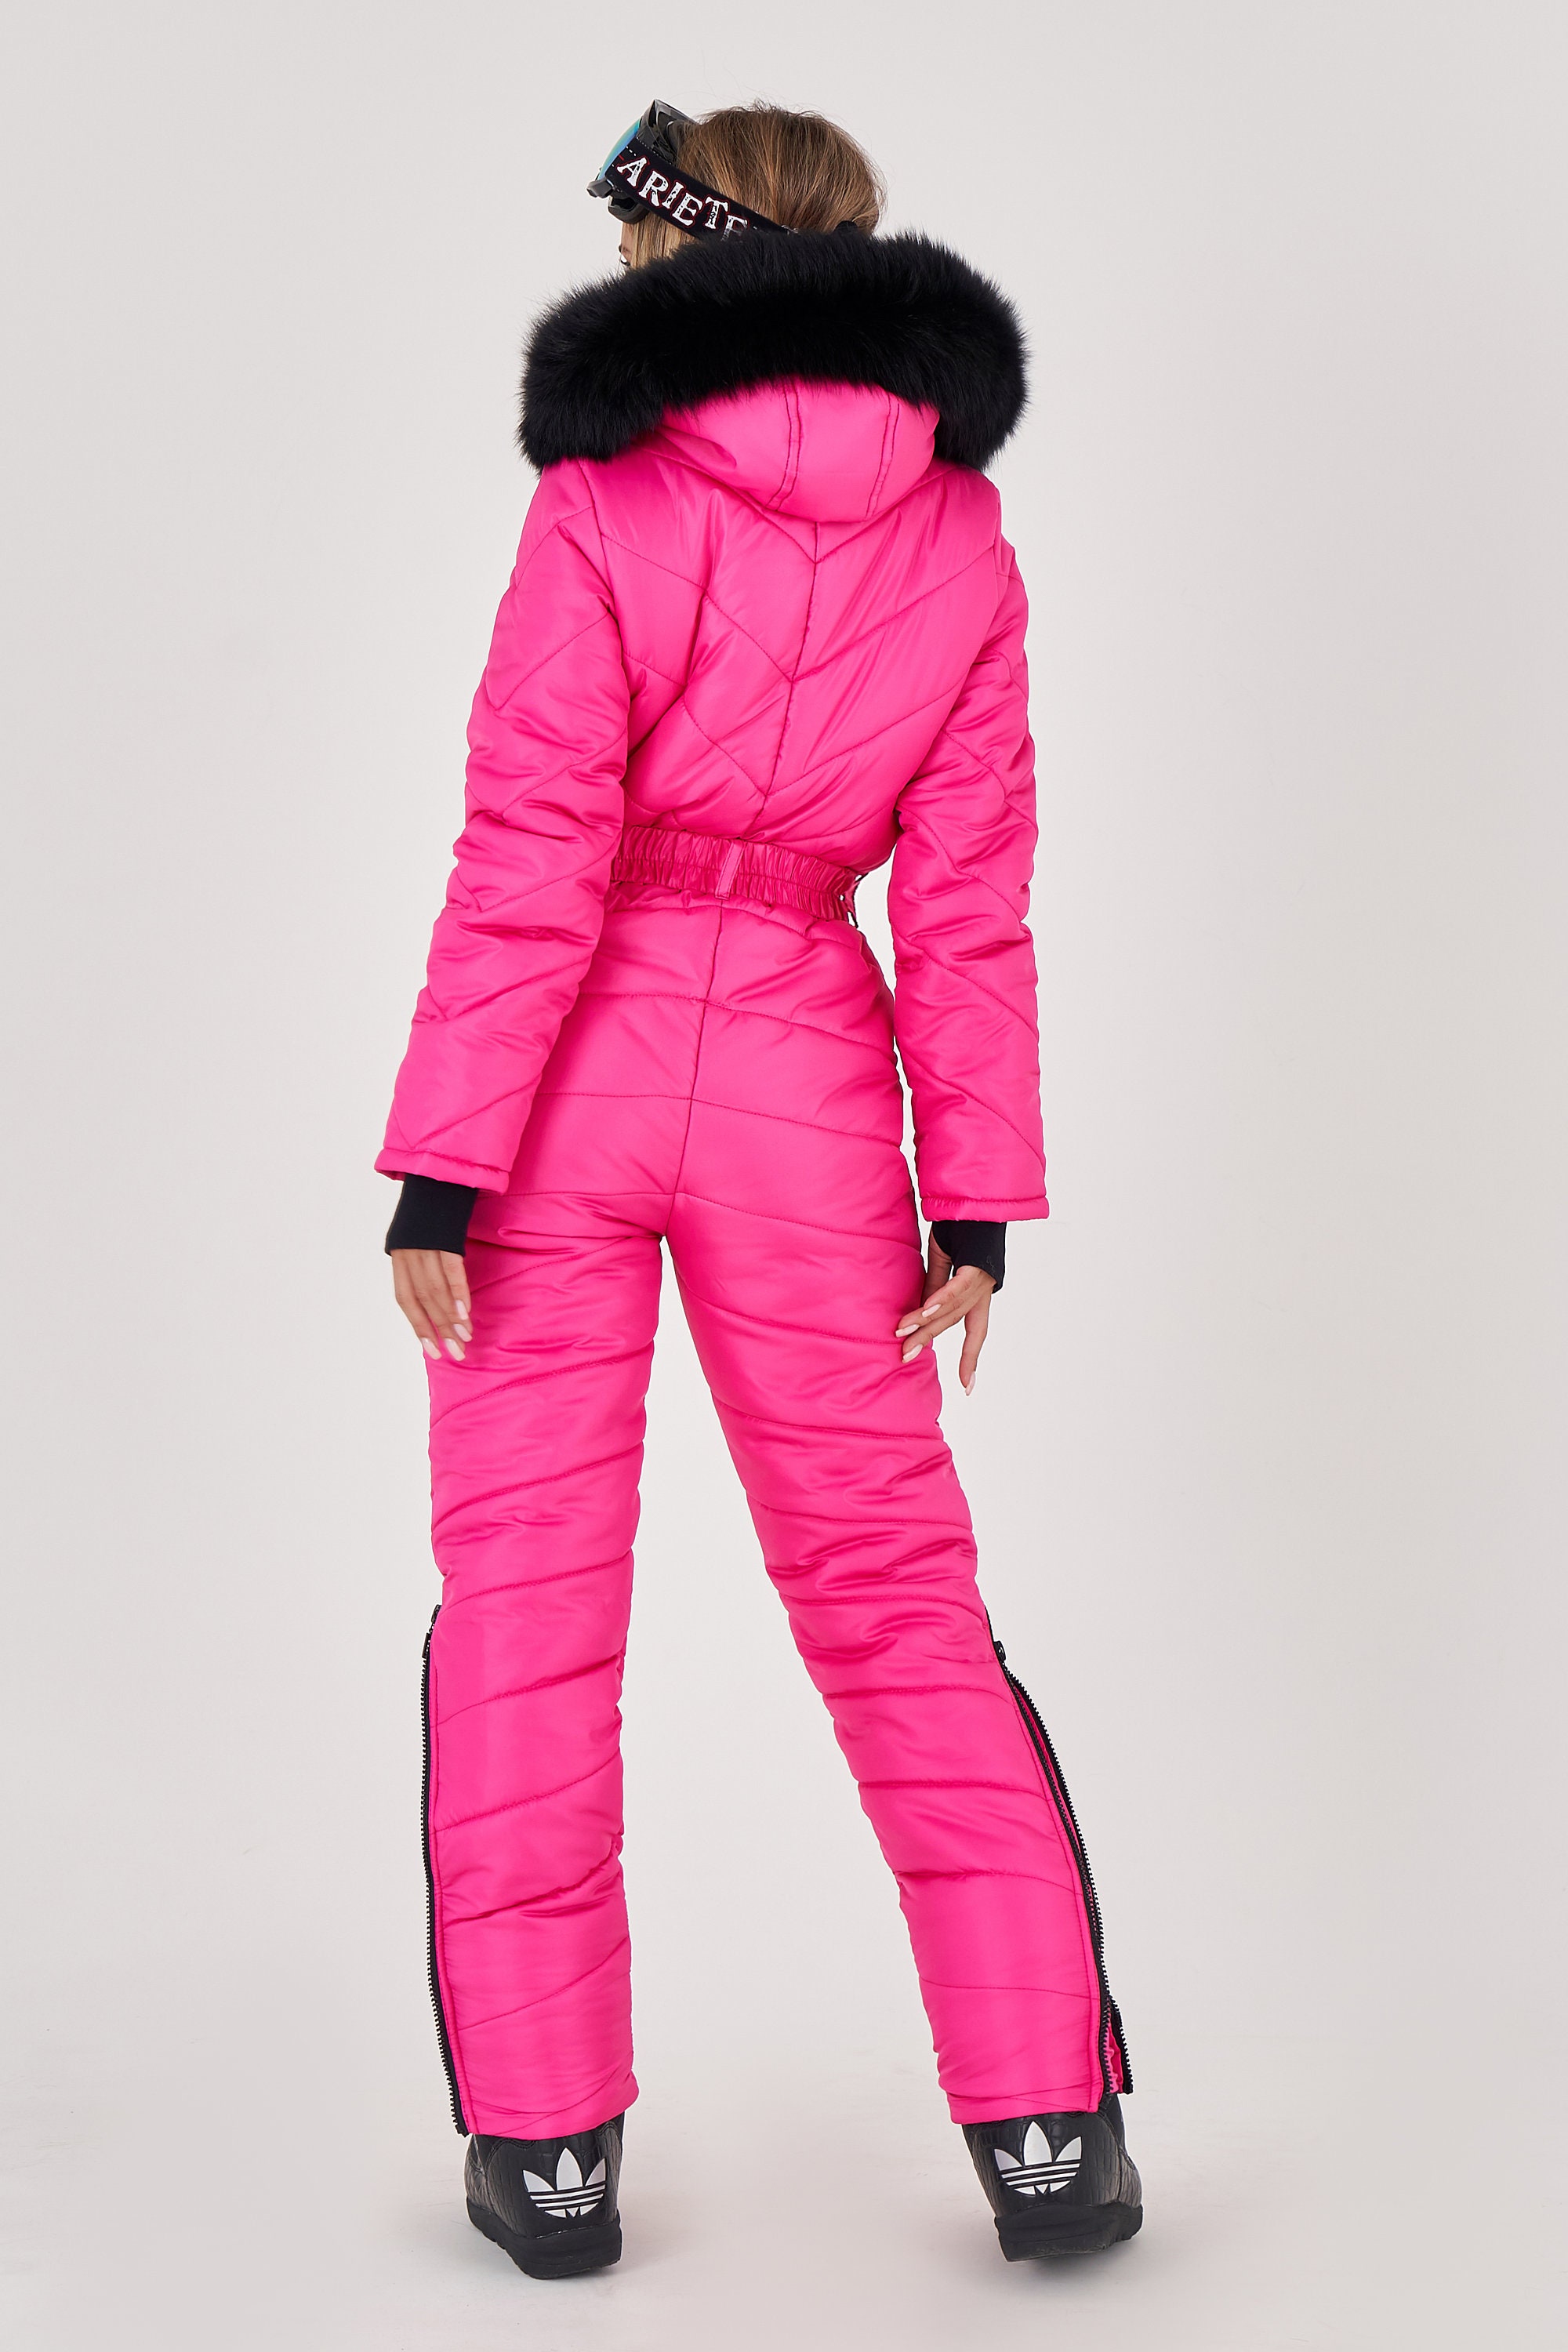 Bright Pink Ski Suit Women's Women Ski Jumpsuit Bright - Etsy